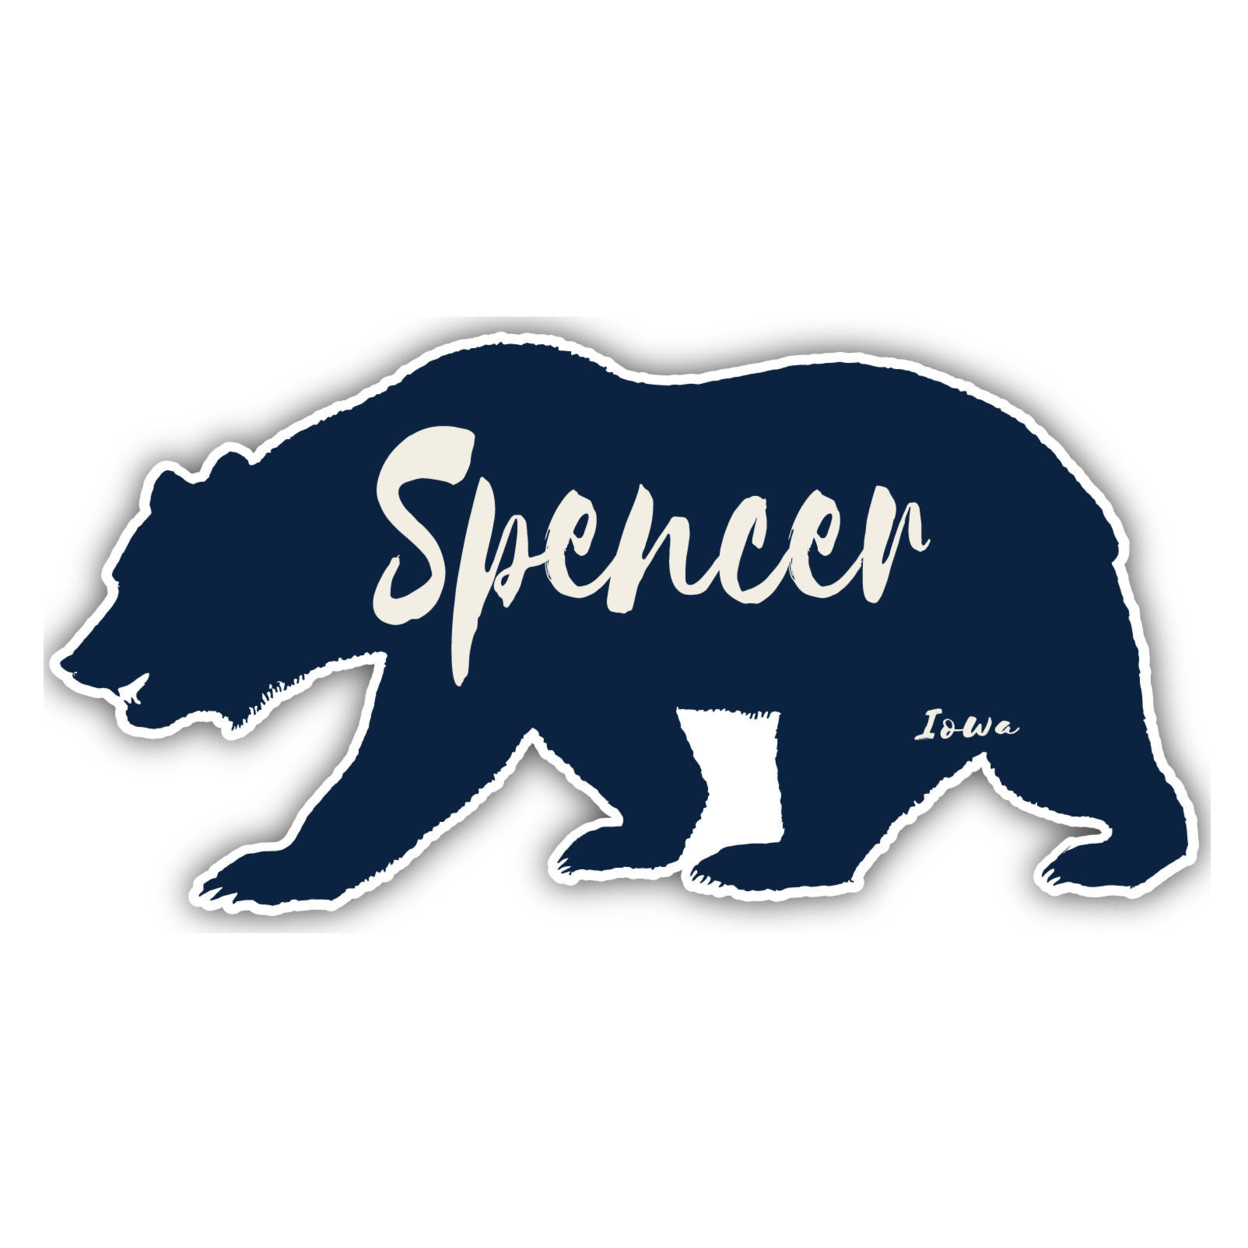 Spencer Iowa Souvenir Decorative Stickers (Choose Theme And Size) - Single Unit, 4-Inch, Bear